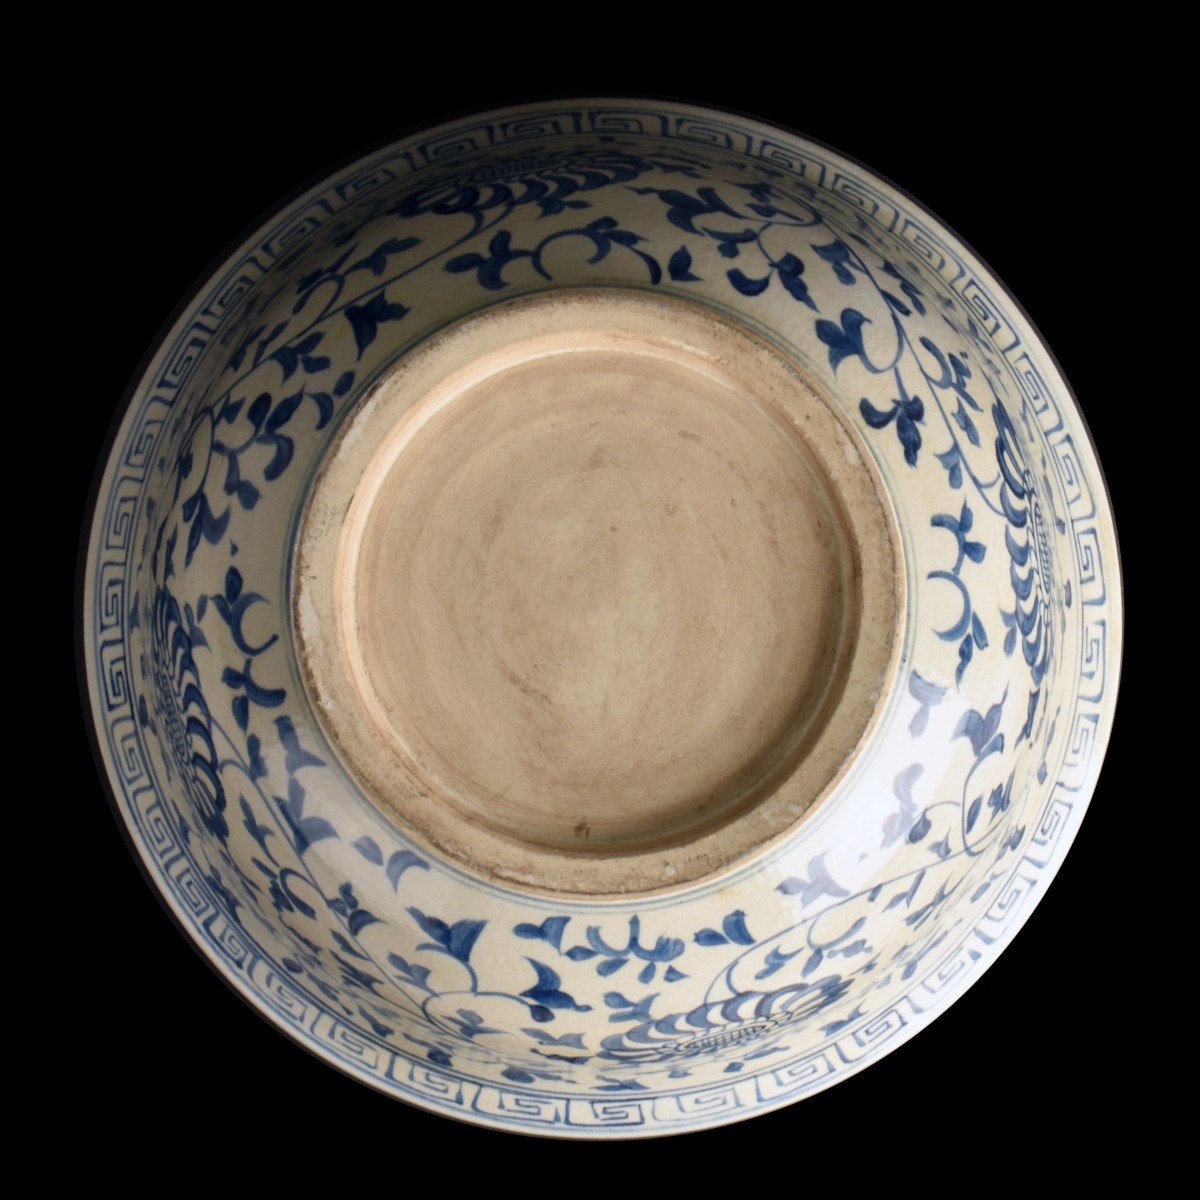 Large Chinese Porcelain Centerpiece Bowl